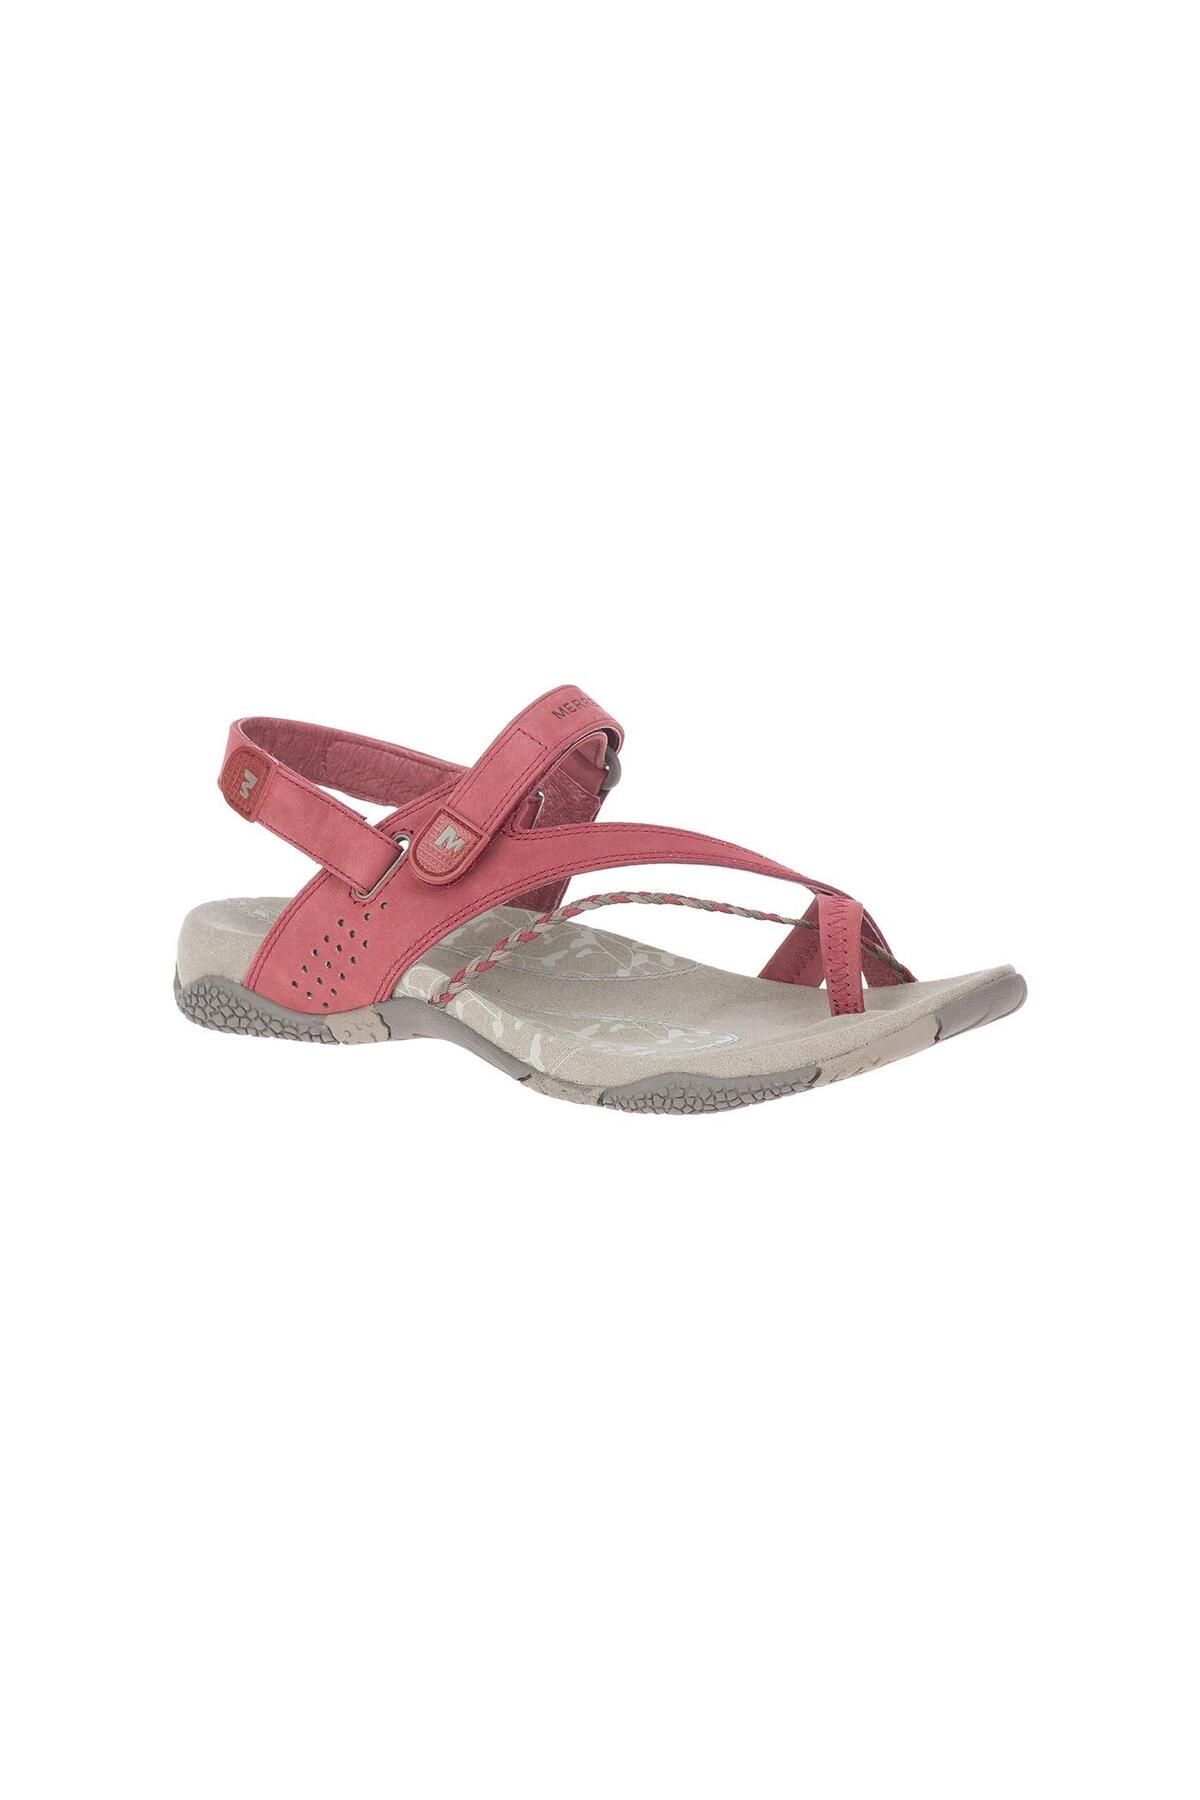 Merrell Siena Kadın Sandalet Pembe-j004500